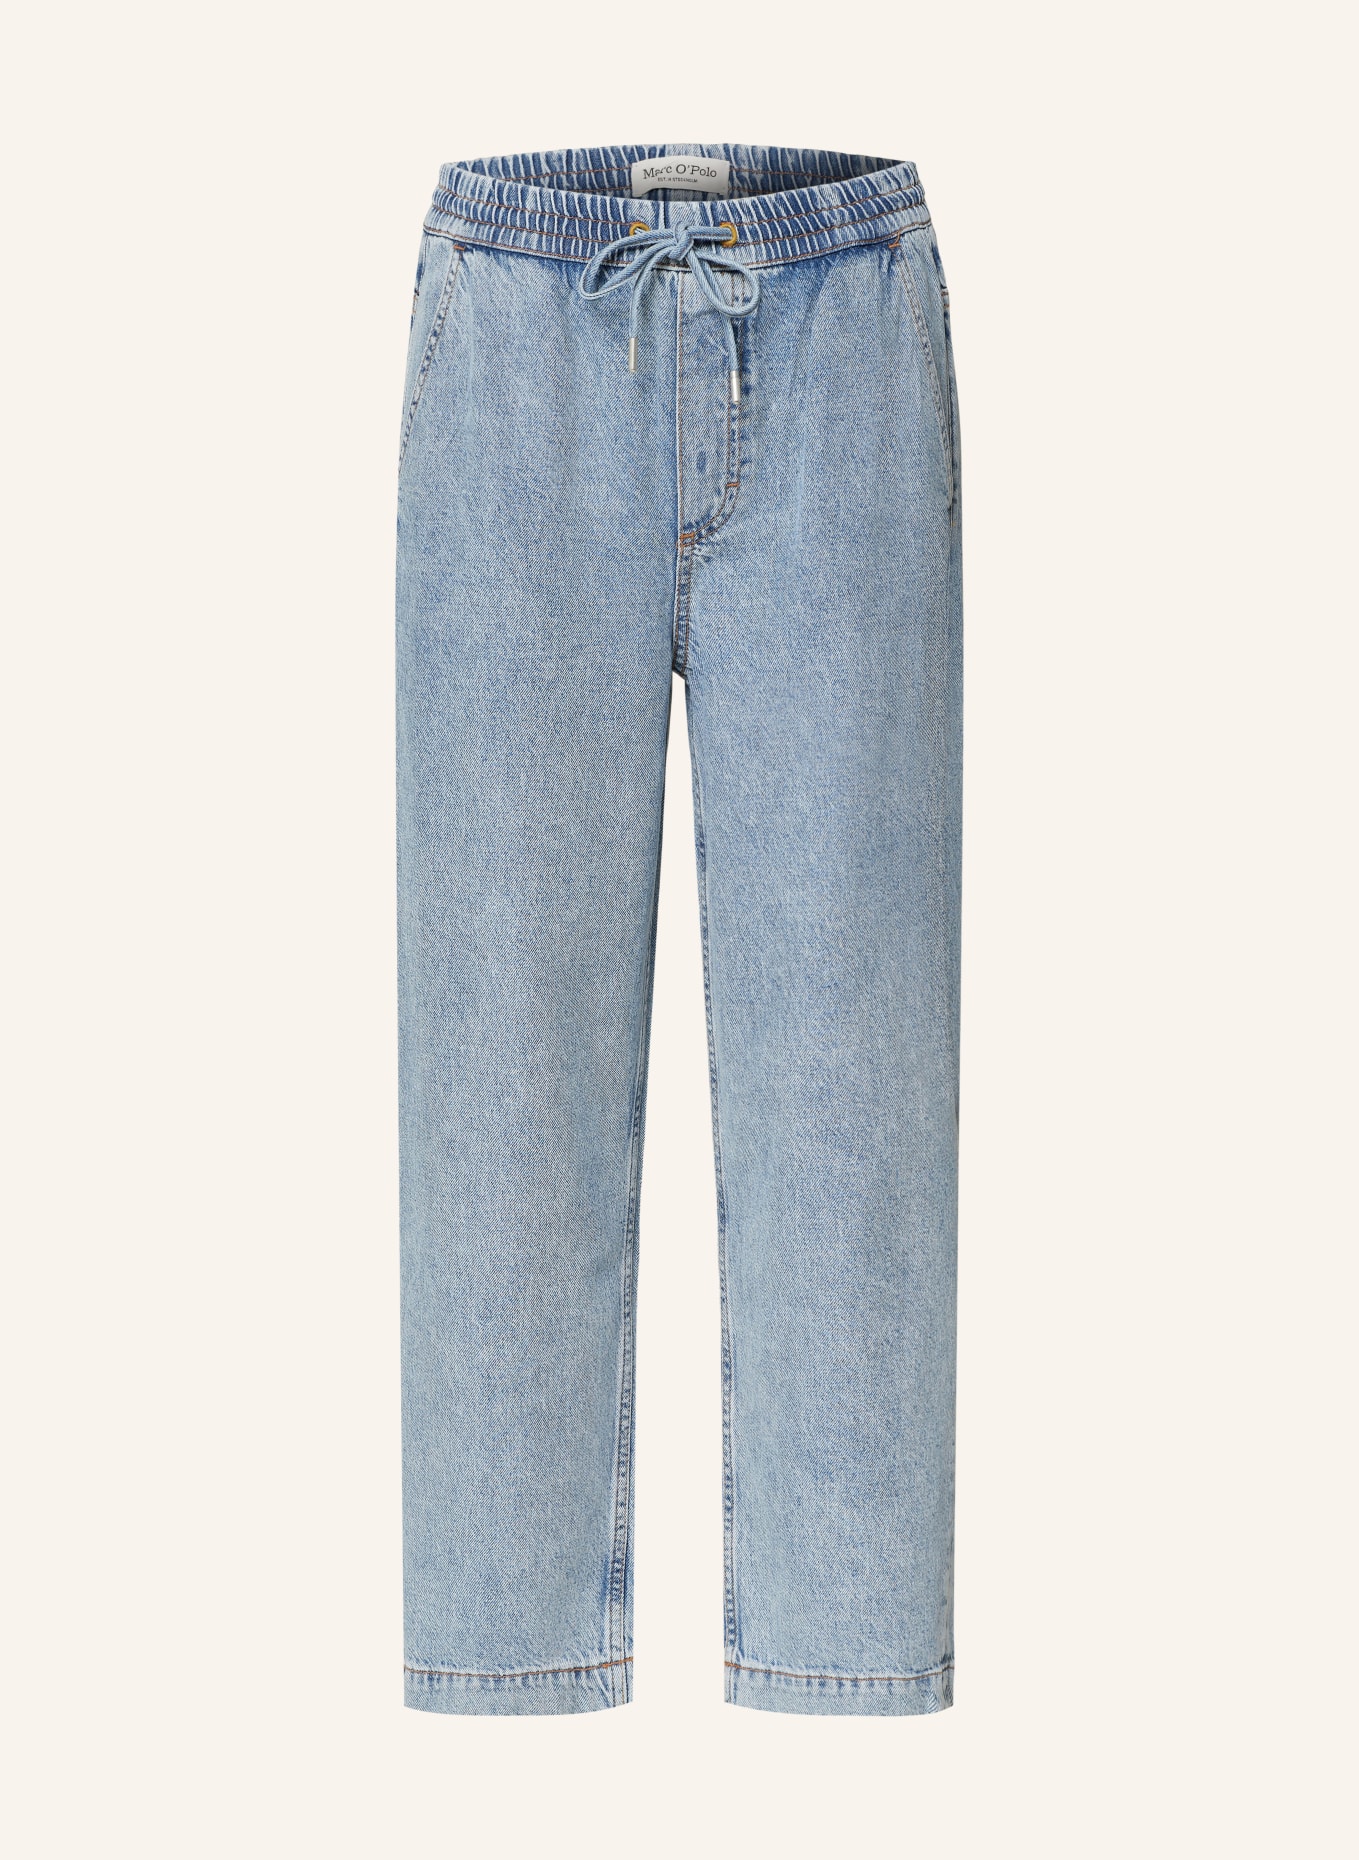 Marc O'Polo 7/8 Jeans, Color: 014 Super light blue tencel wash (Image 1)